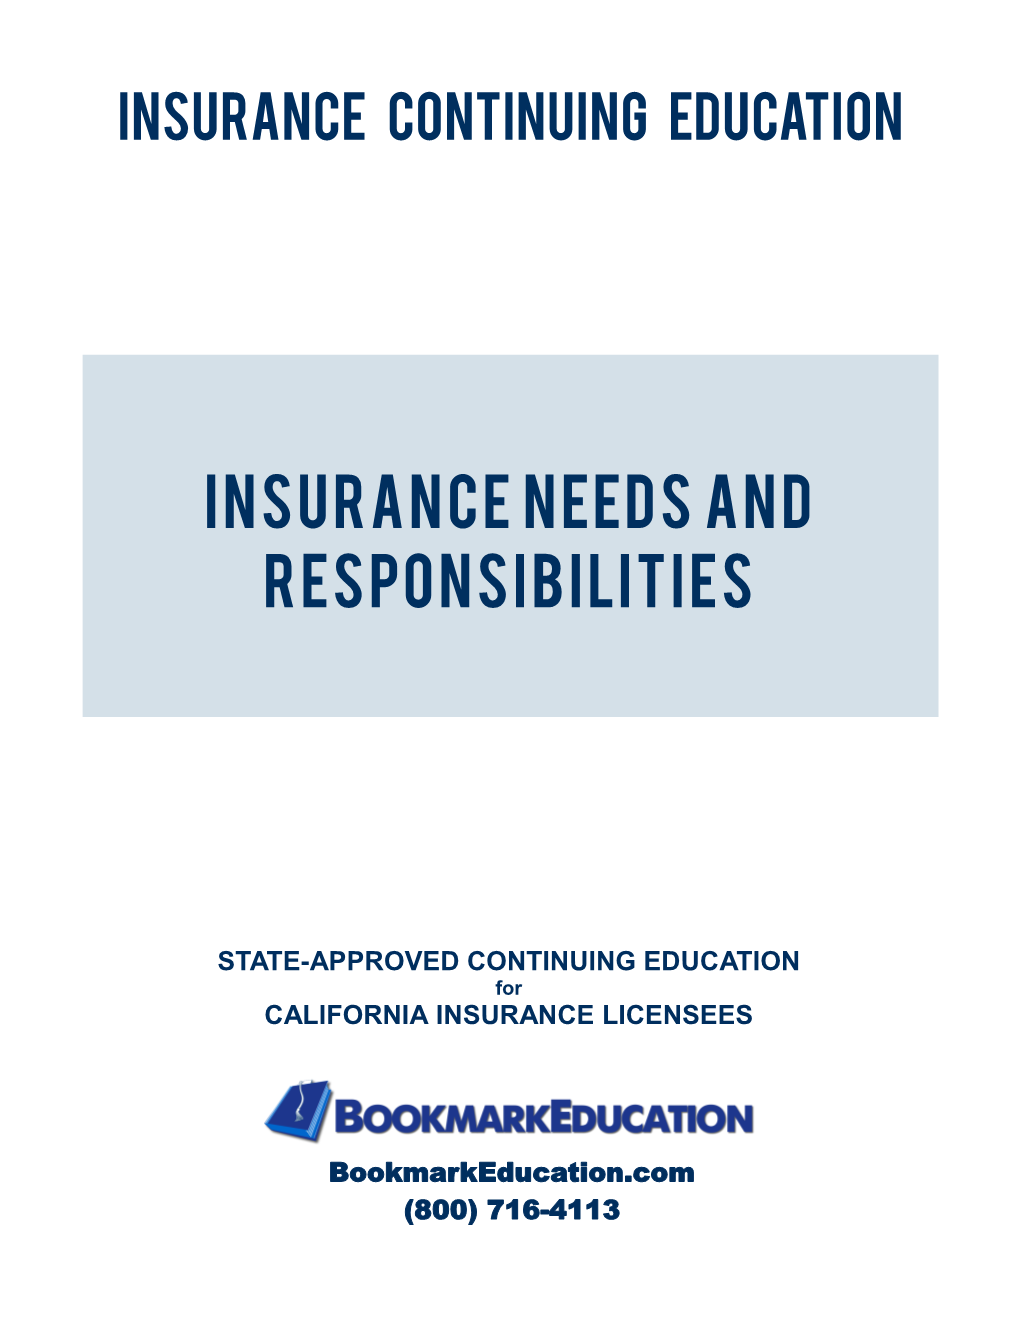 Insurance Needs and Responsibilities